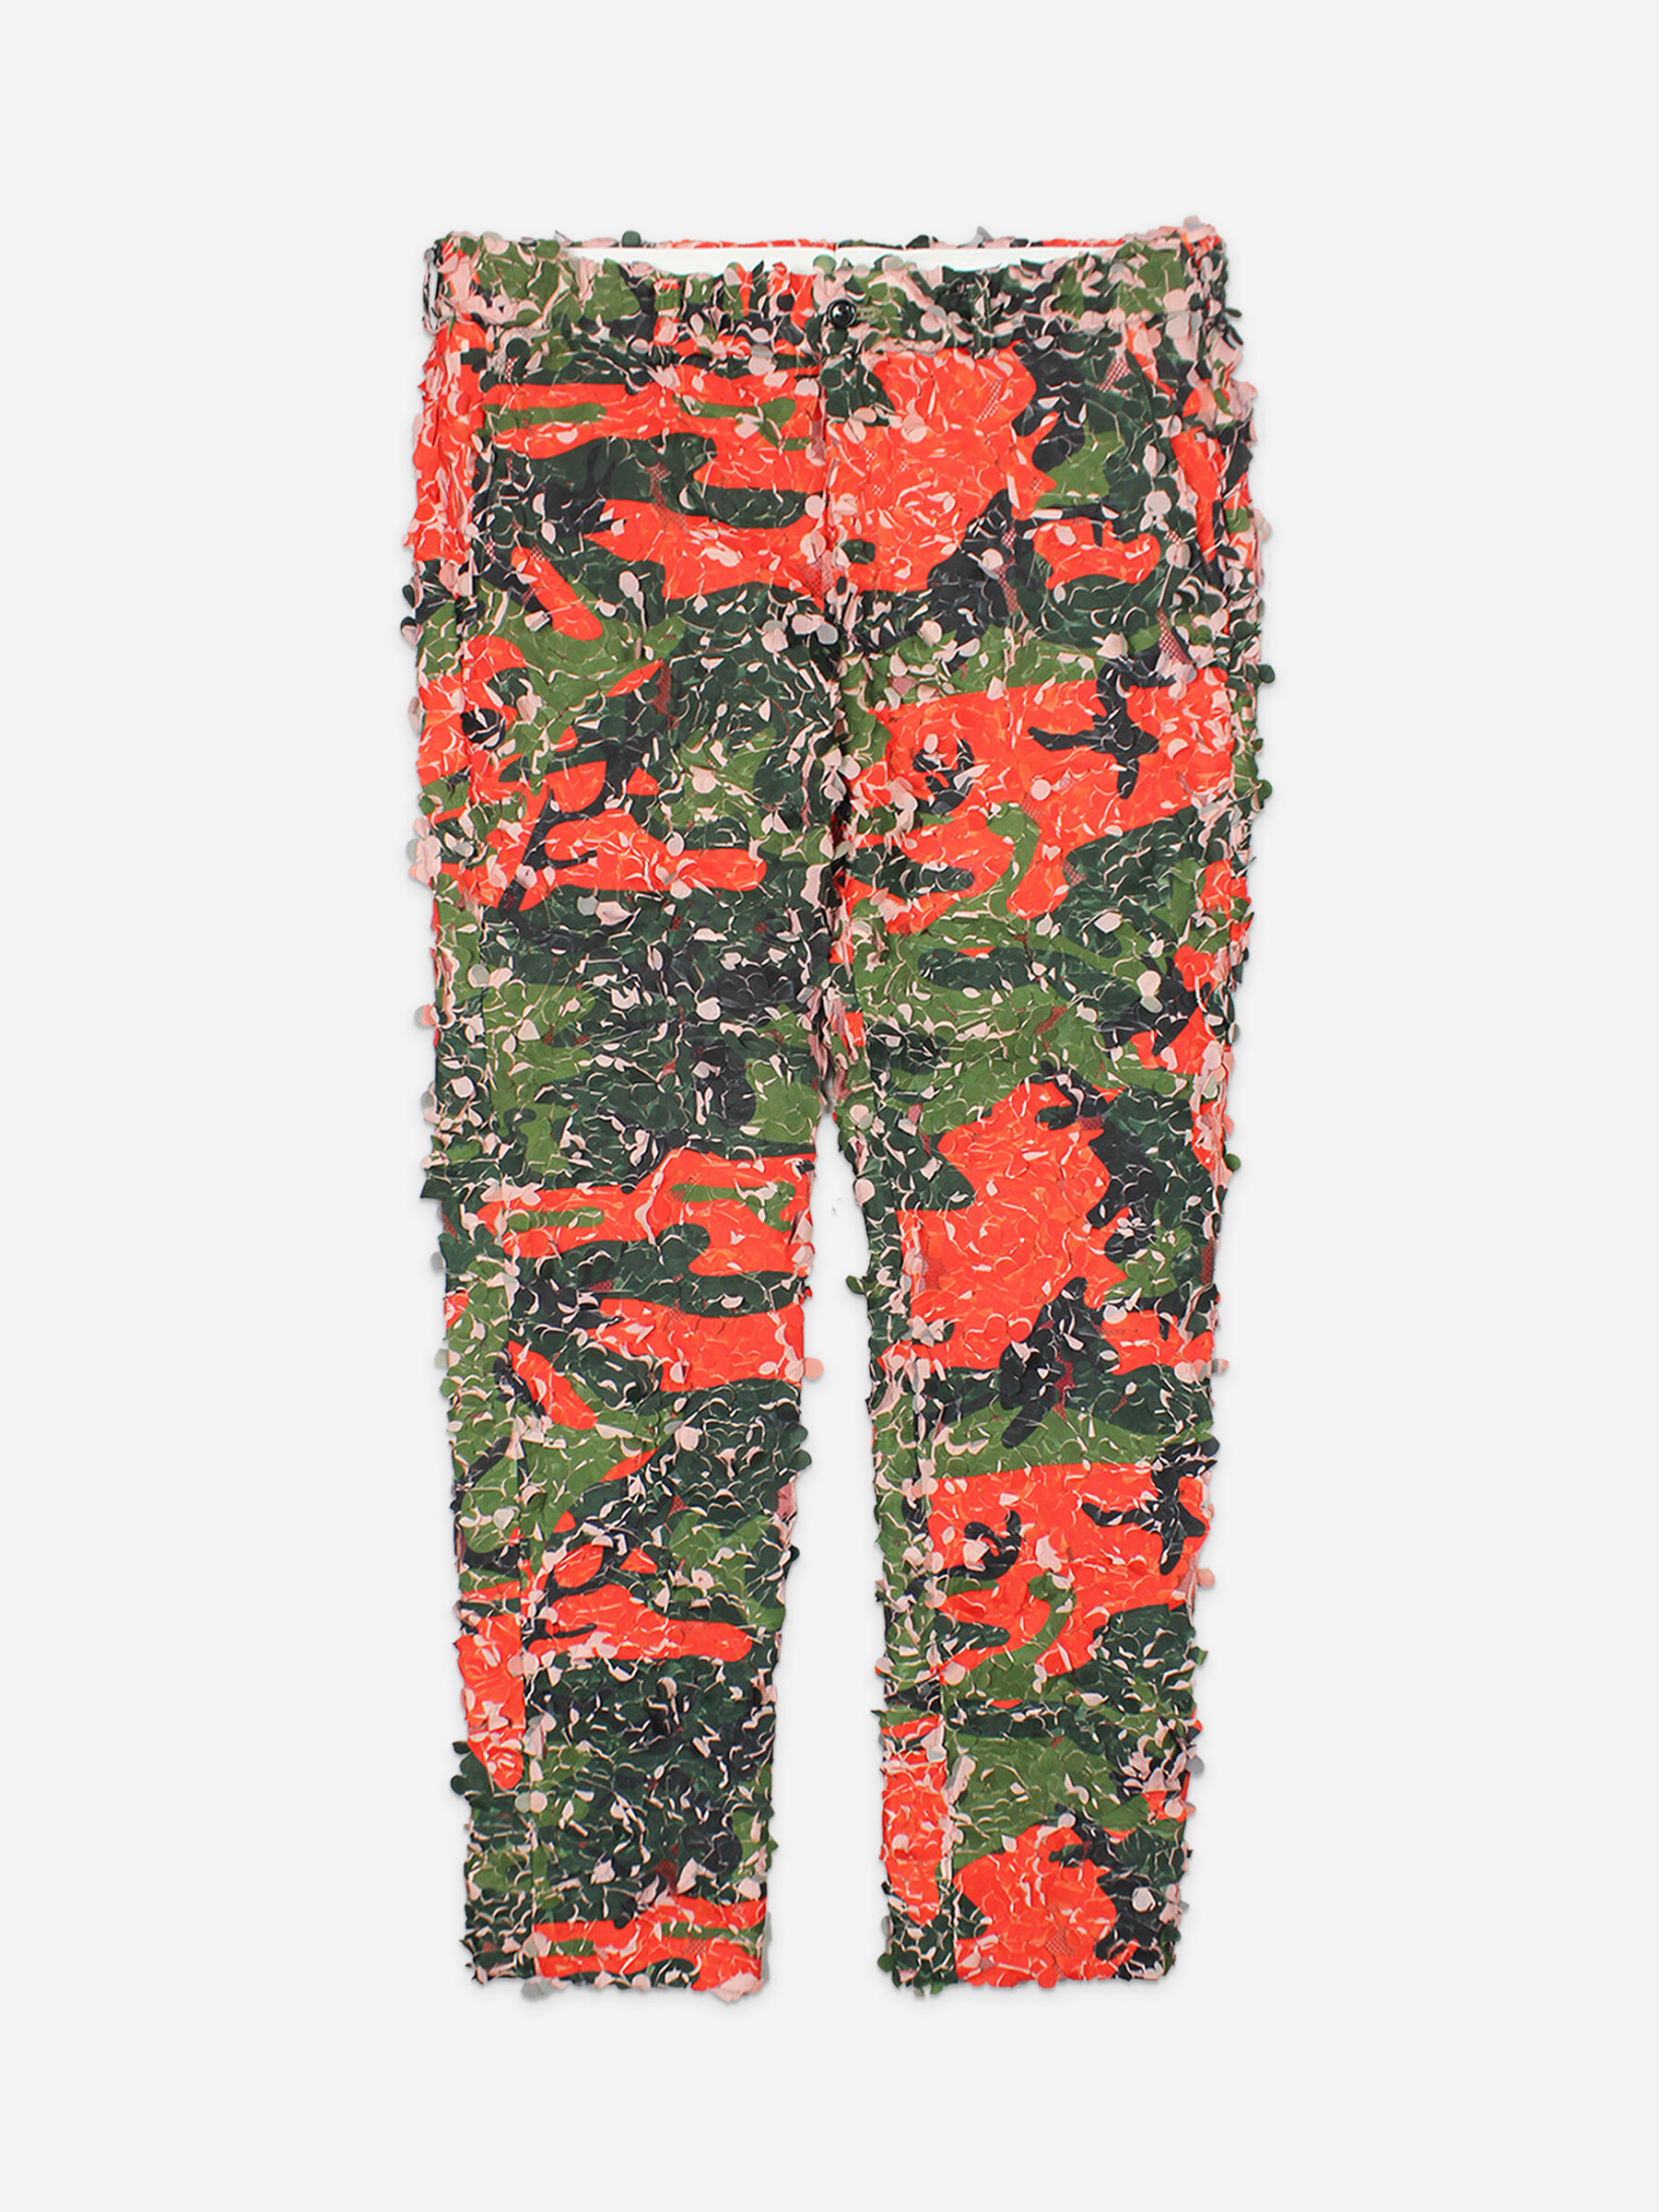 Comme des Garçons Homme Plus SS2019 Embroidered Camouflage Pants